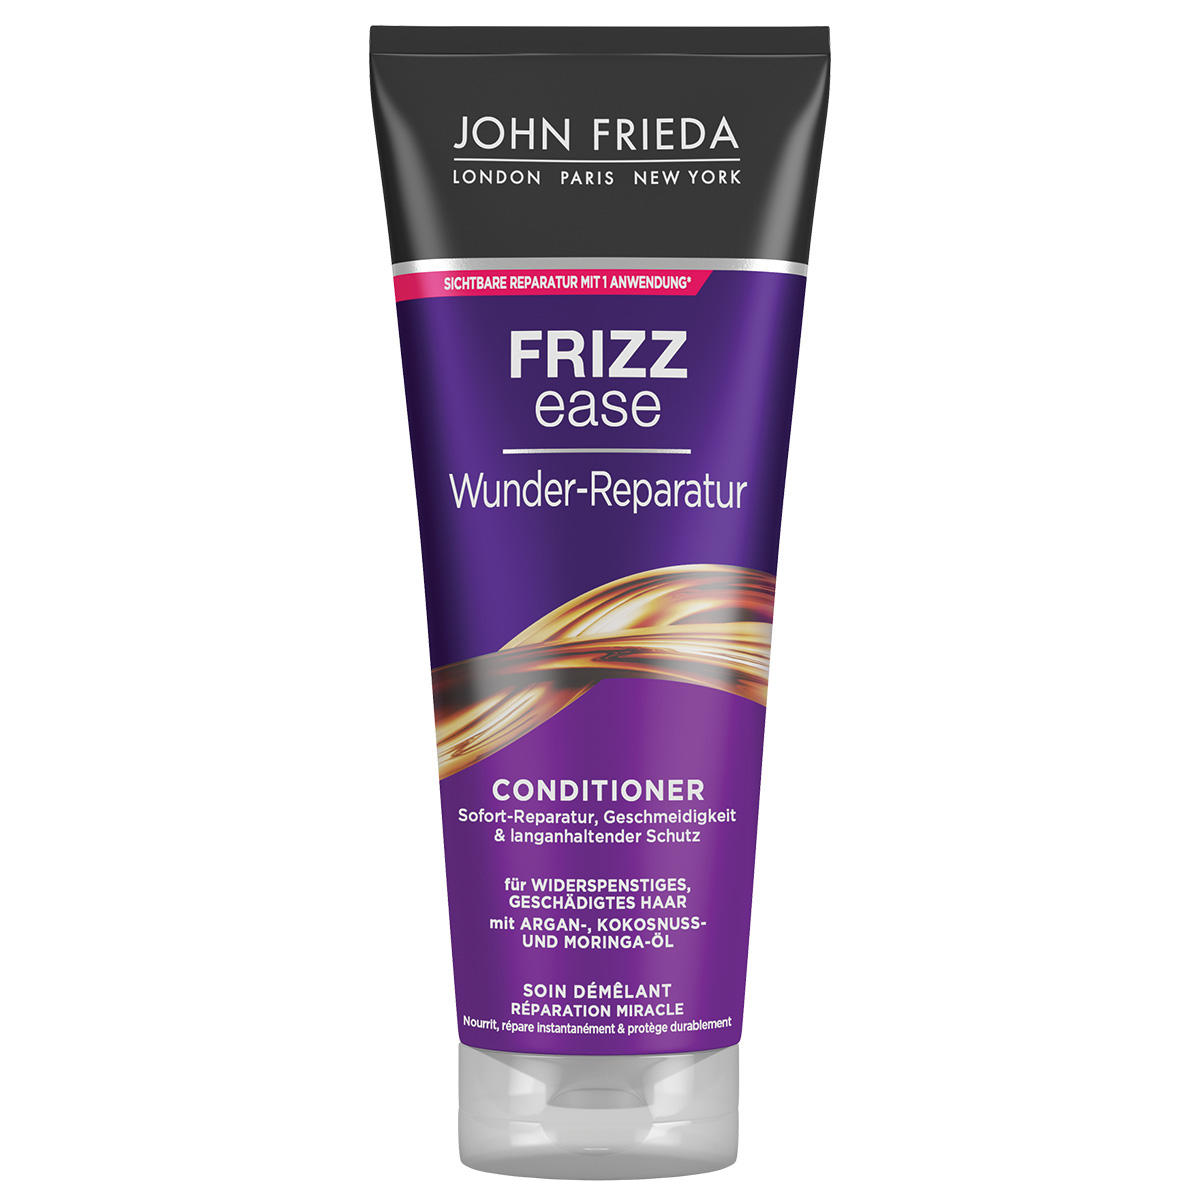 JOHN FRIEDA Frizz Ease Wunder-Reparatur Conditioner 250 ml - 1